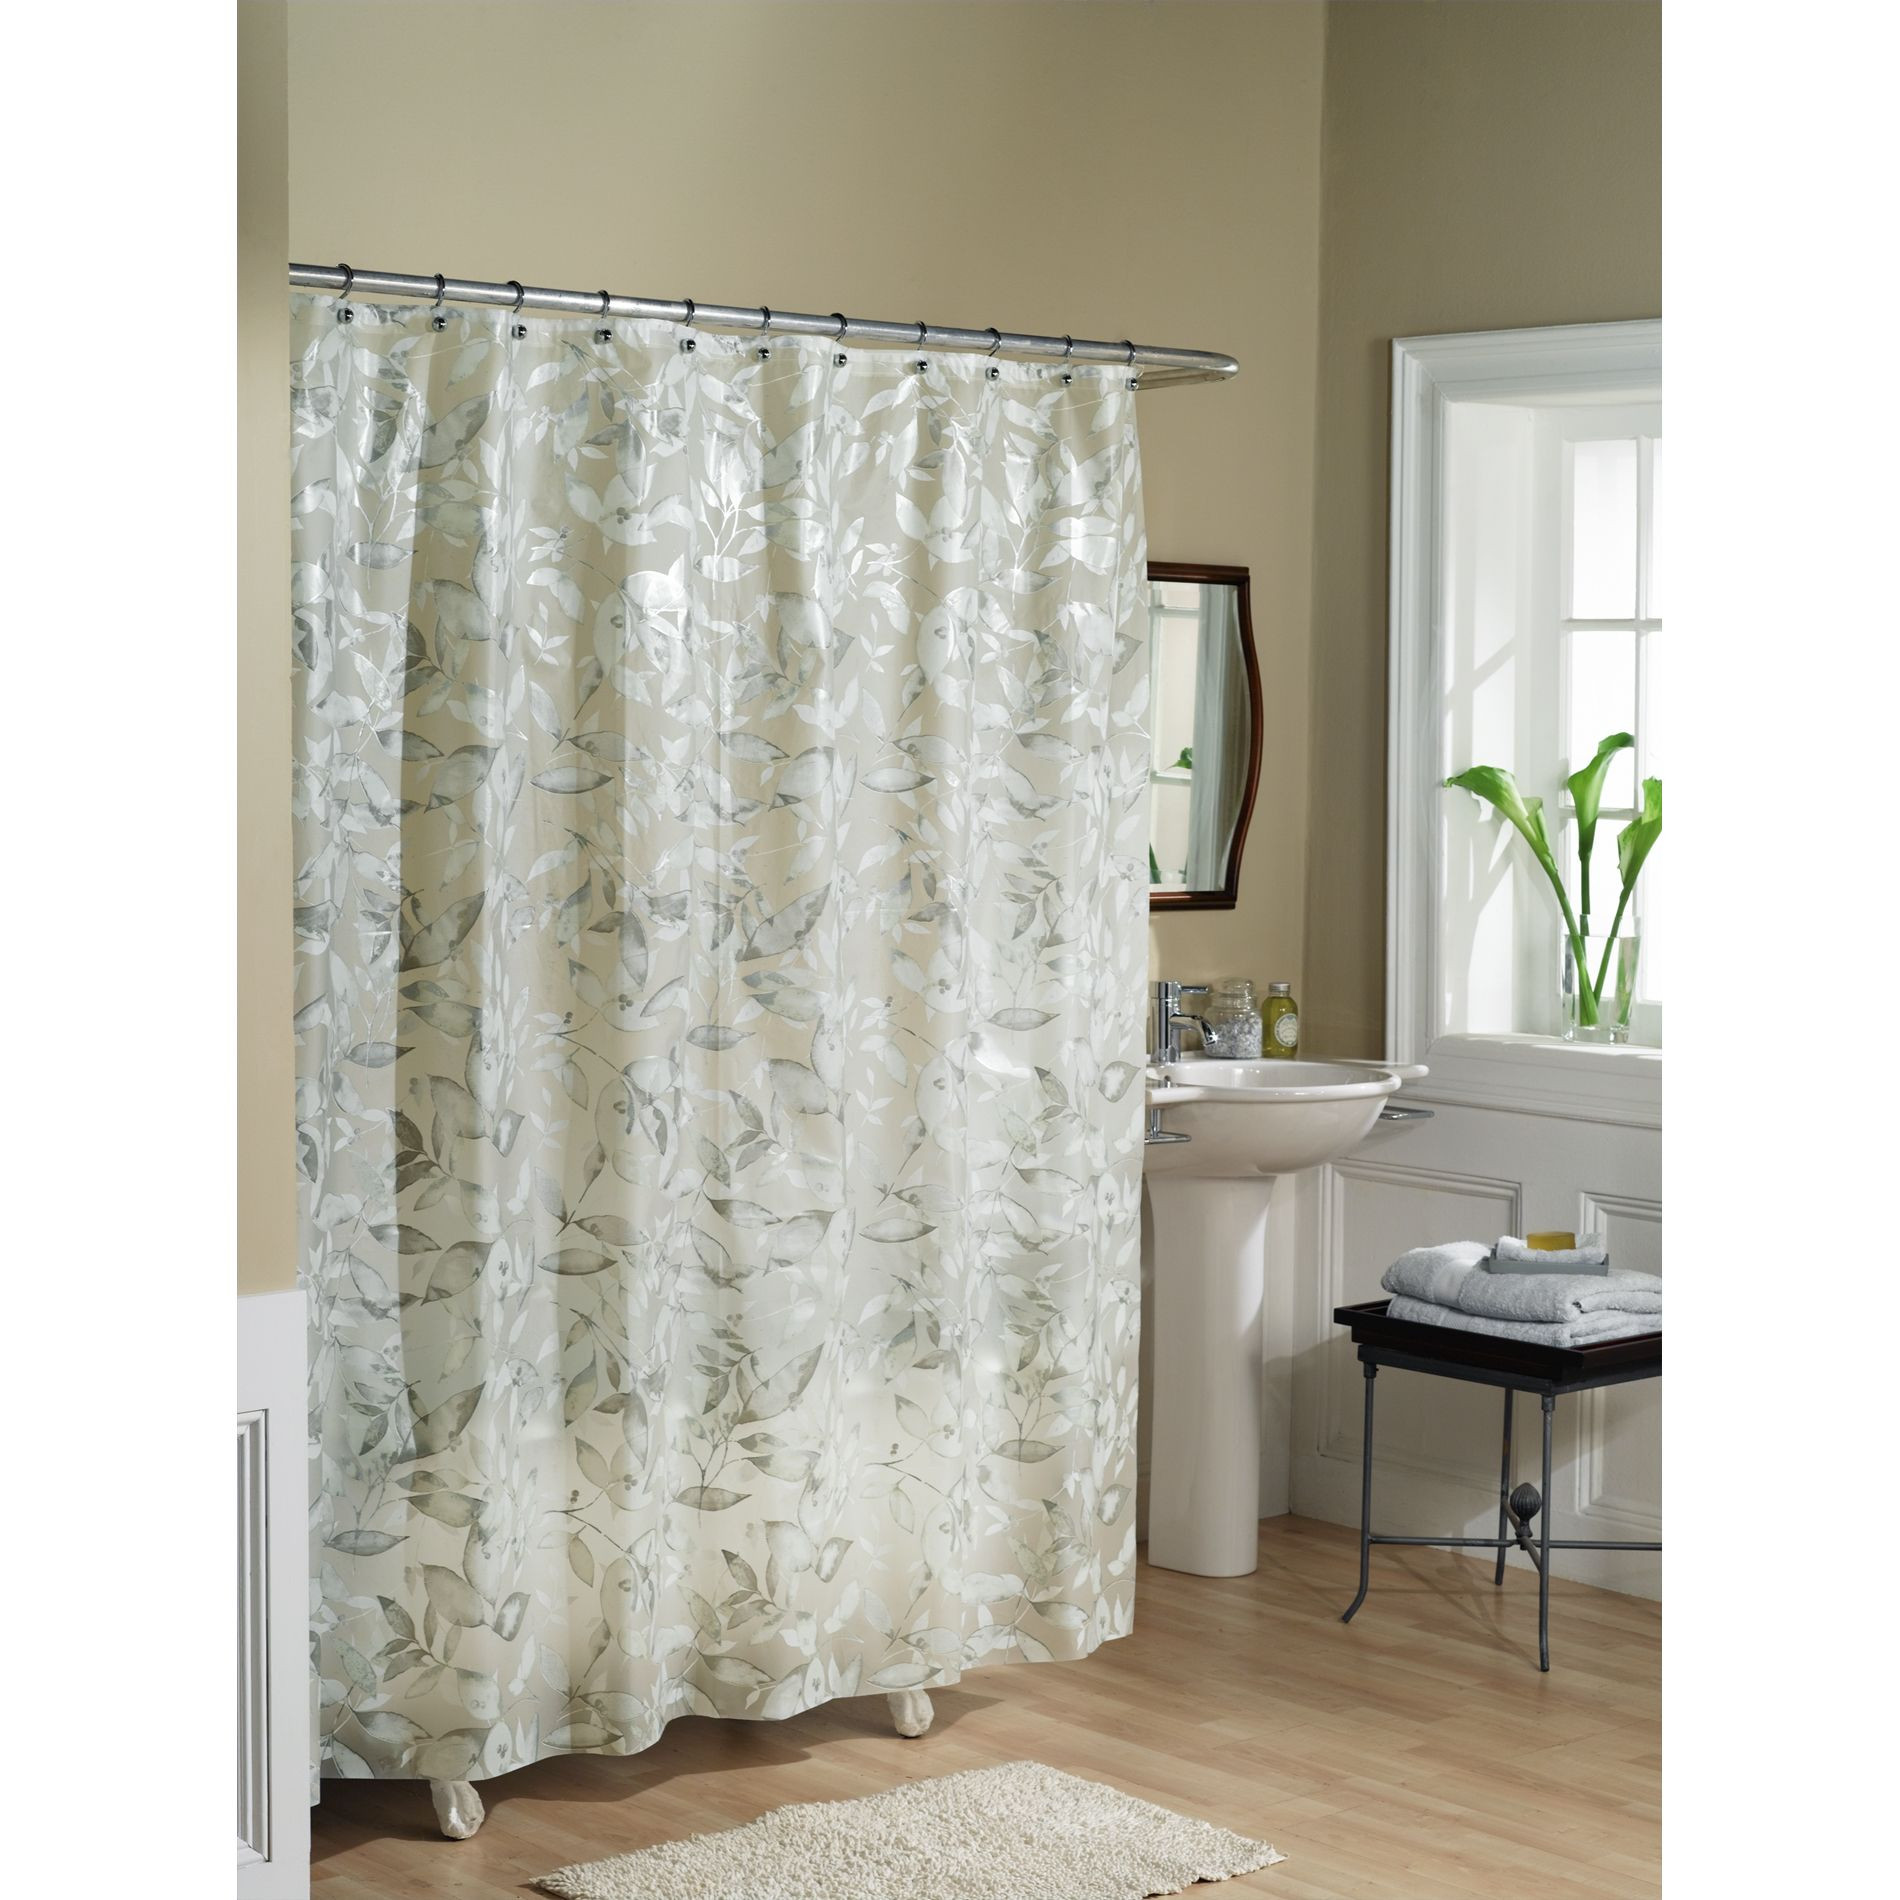 Bathroom Shower Curtains
 Essential Home Shower Curtain Tea Leaves Vinyl PEVA Home